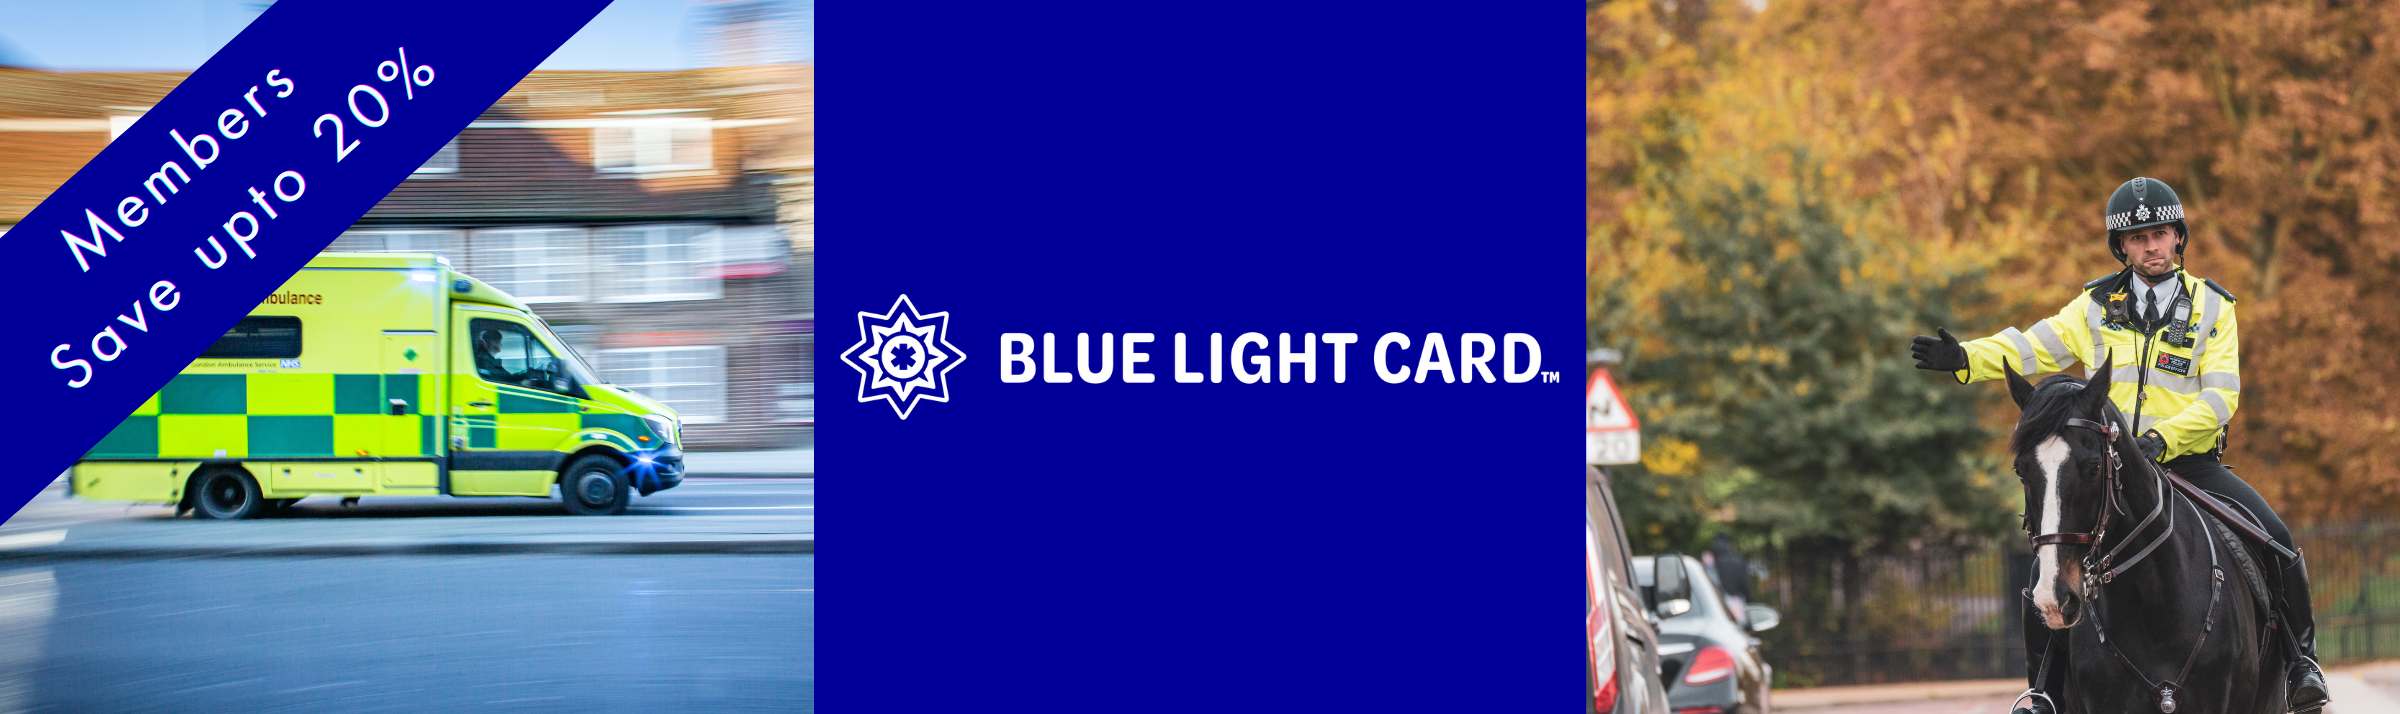 Blue Light Card Banner